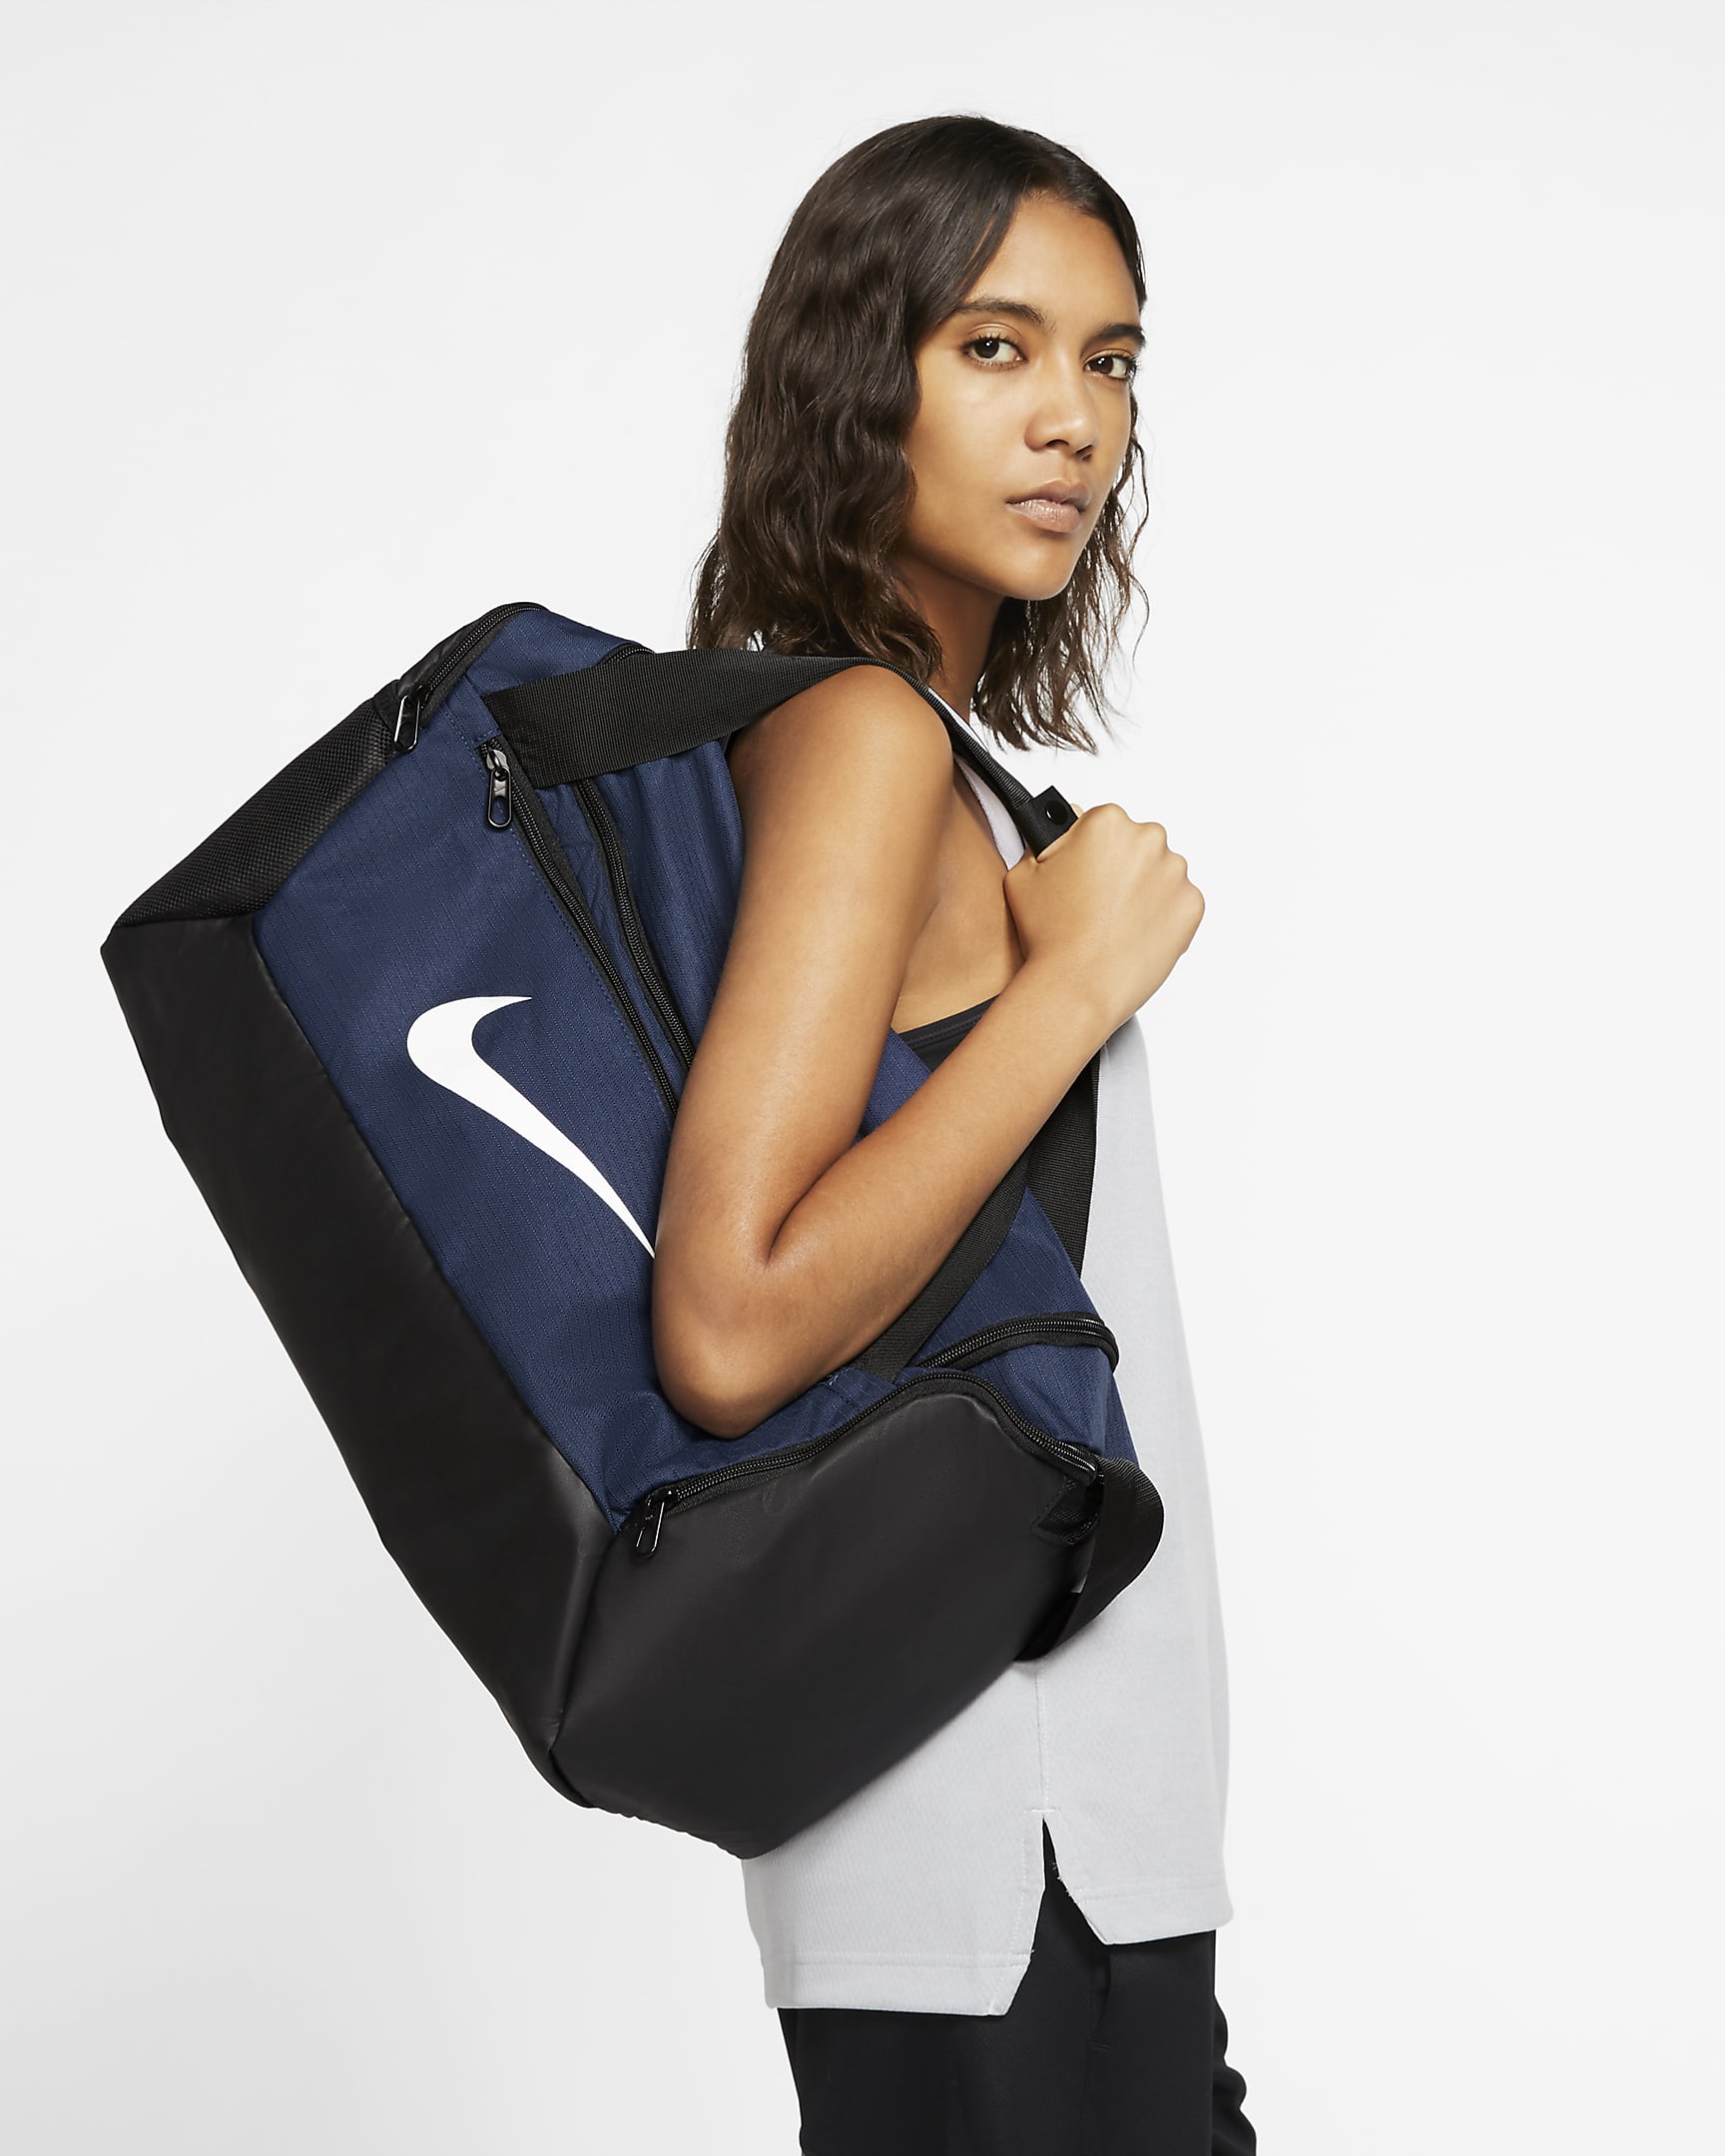 Nike Brasilia Training Duffel Bag (Small). Nike VN